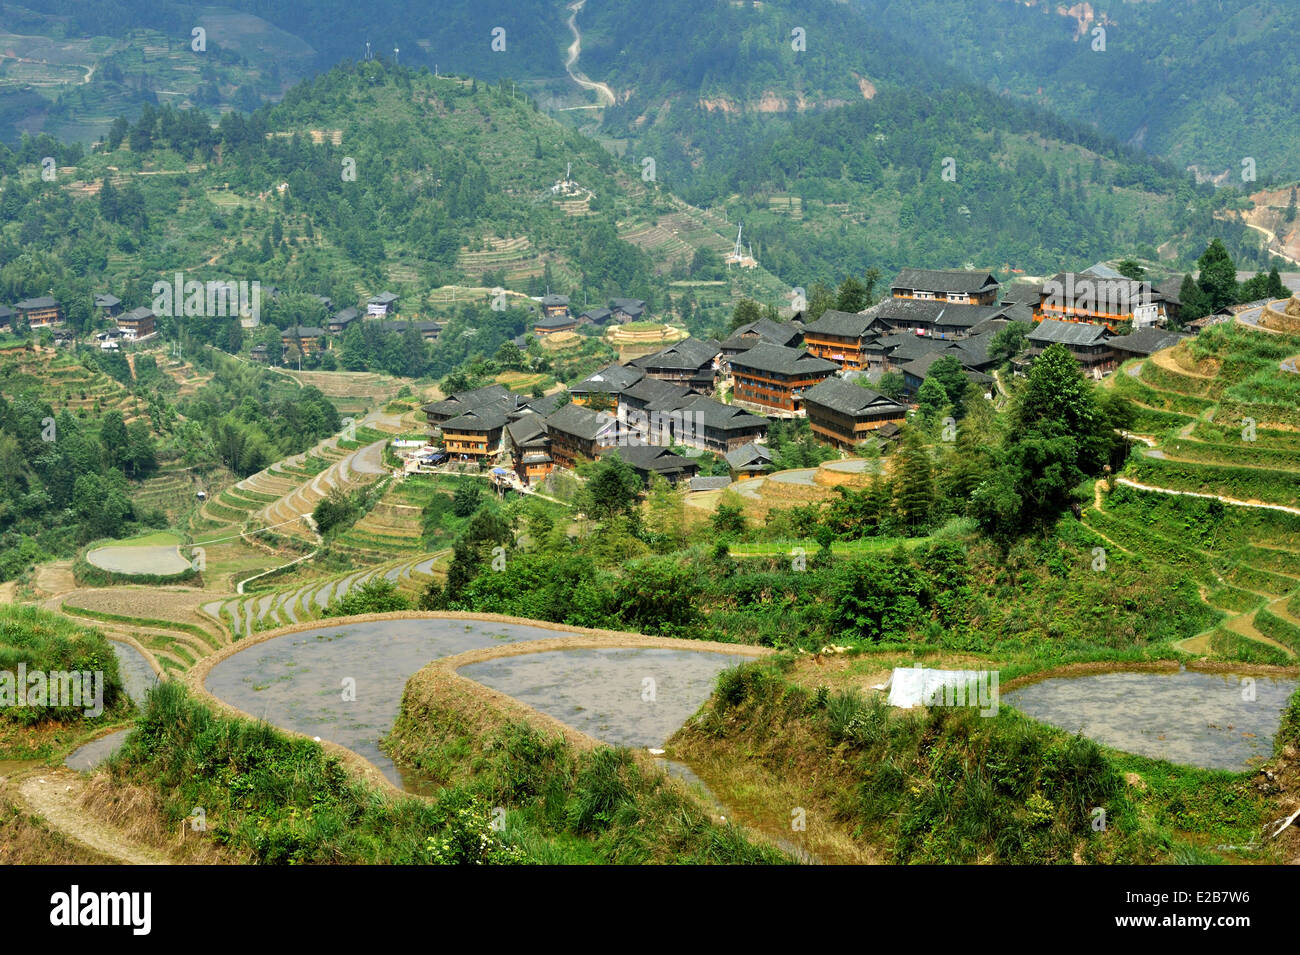 China, Guangxi Province, Longsheng, rice terraces at Longji Stock Photo